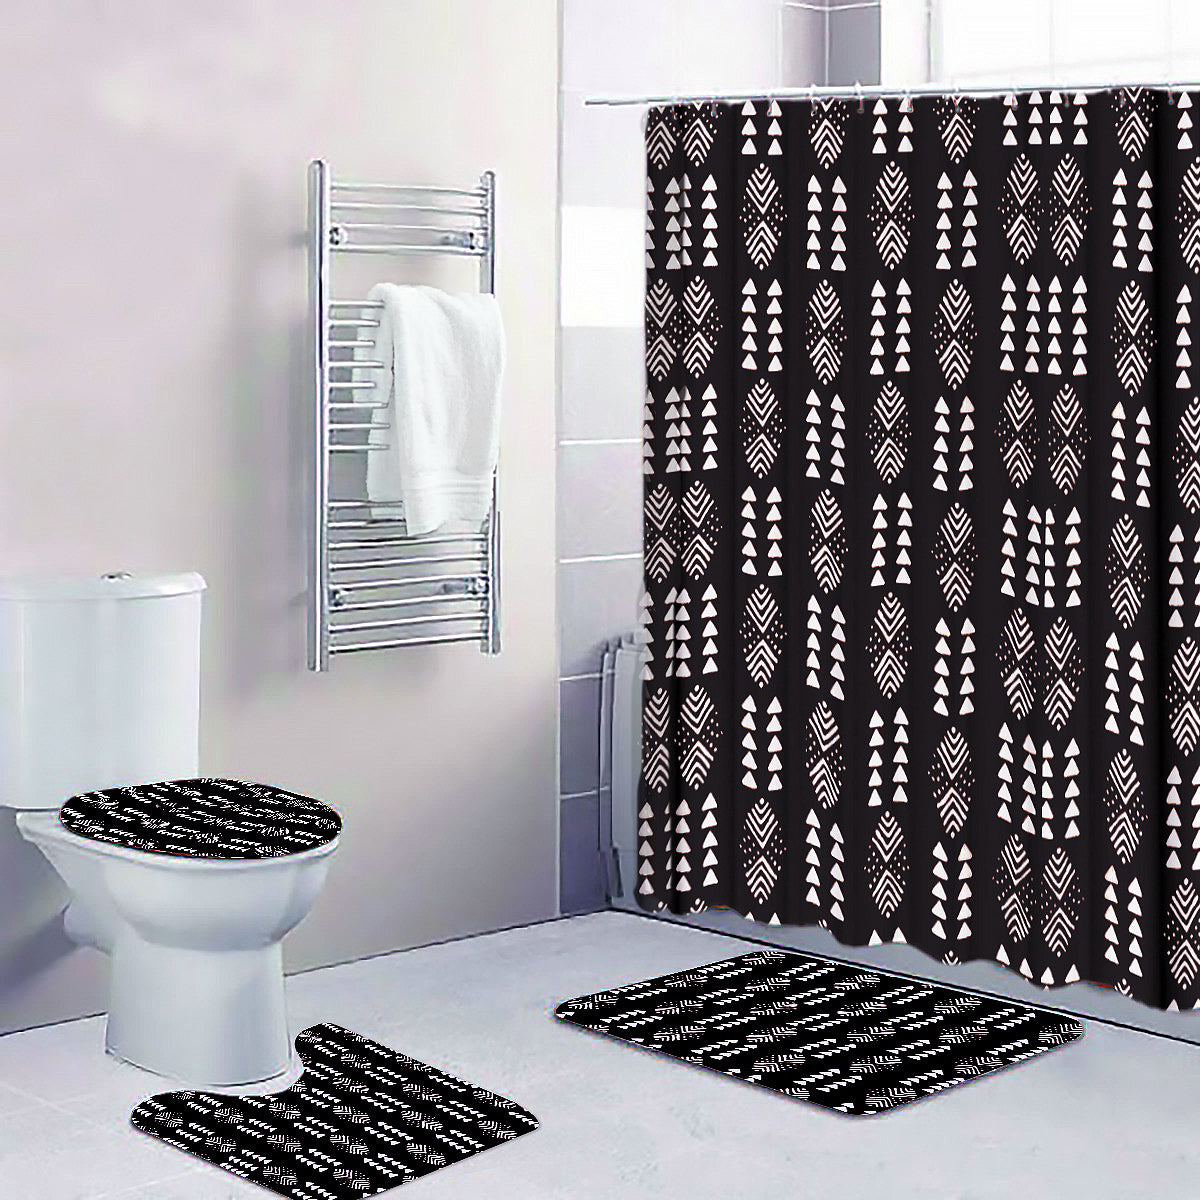 Black and White African Decor Bathroom Set Tribal Print